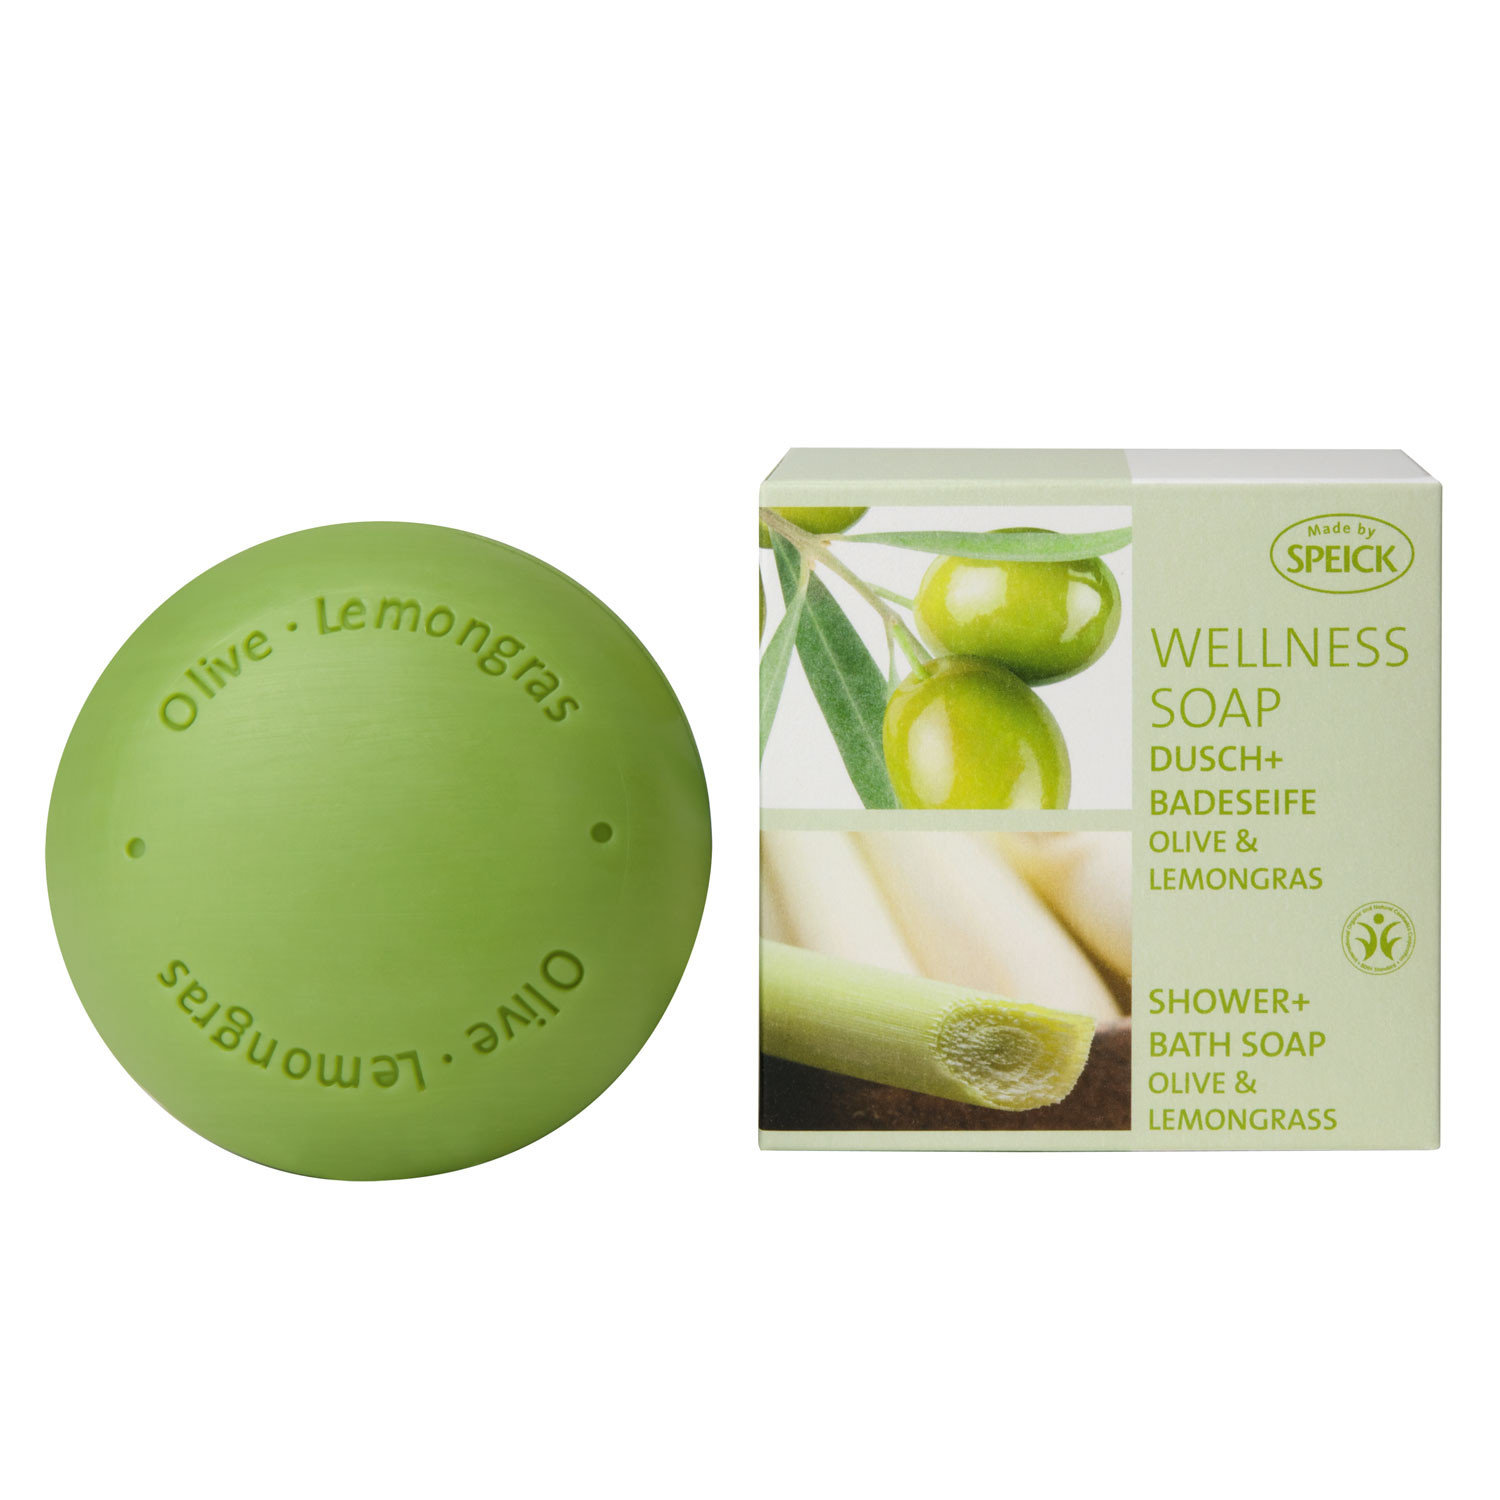 Speick natural Wellness Soap мыло для душа и баниолива и лемонграсс 200г